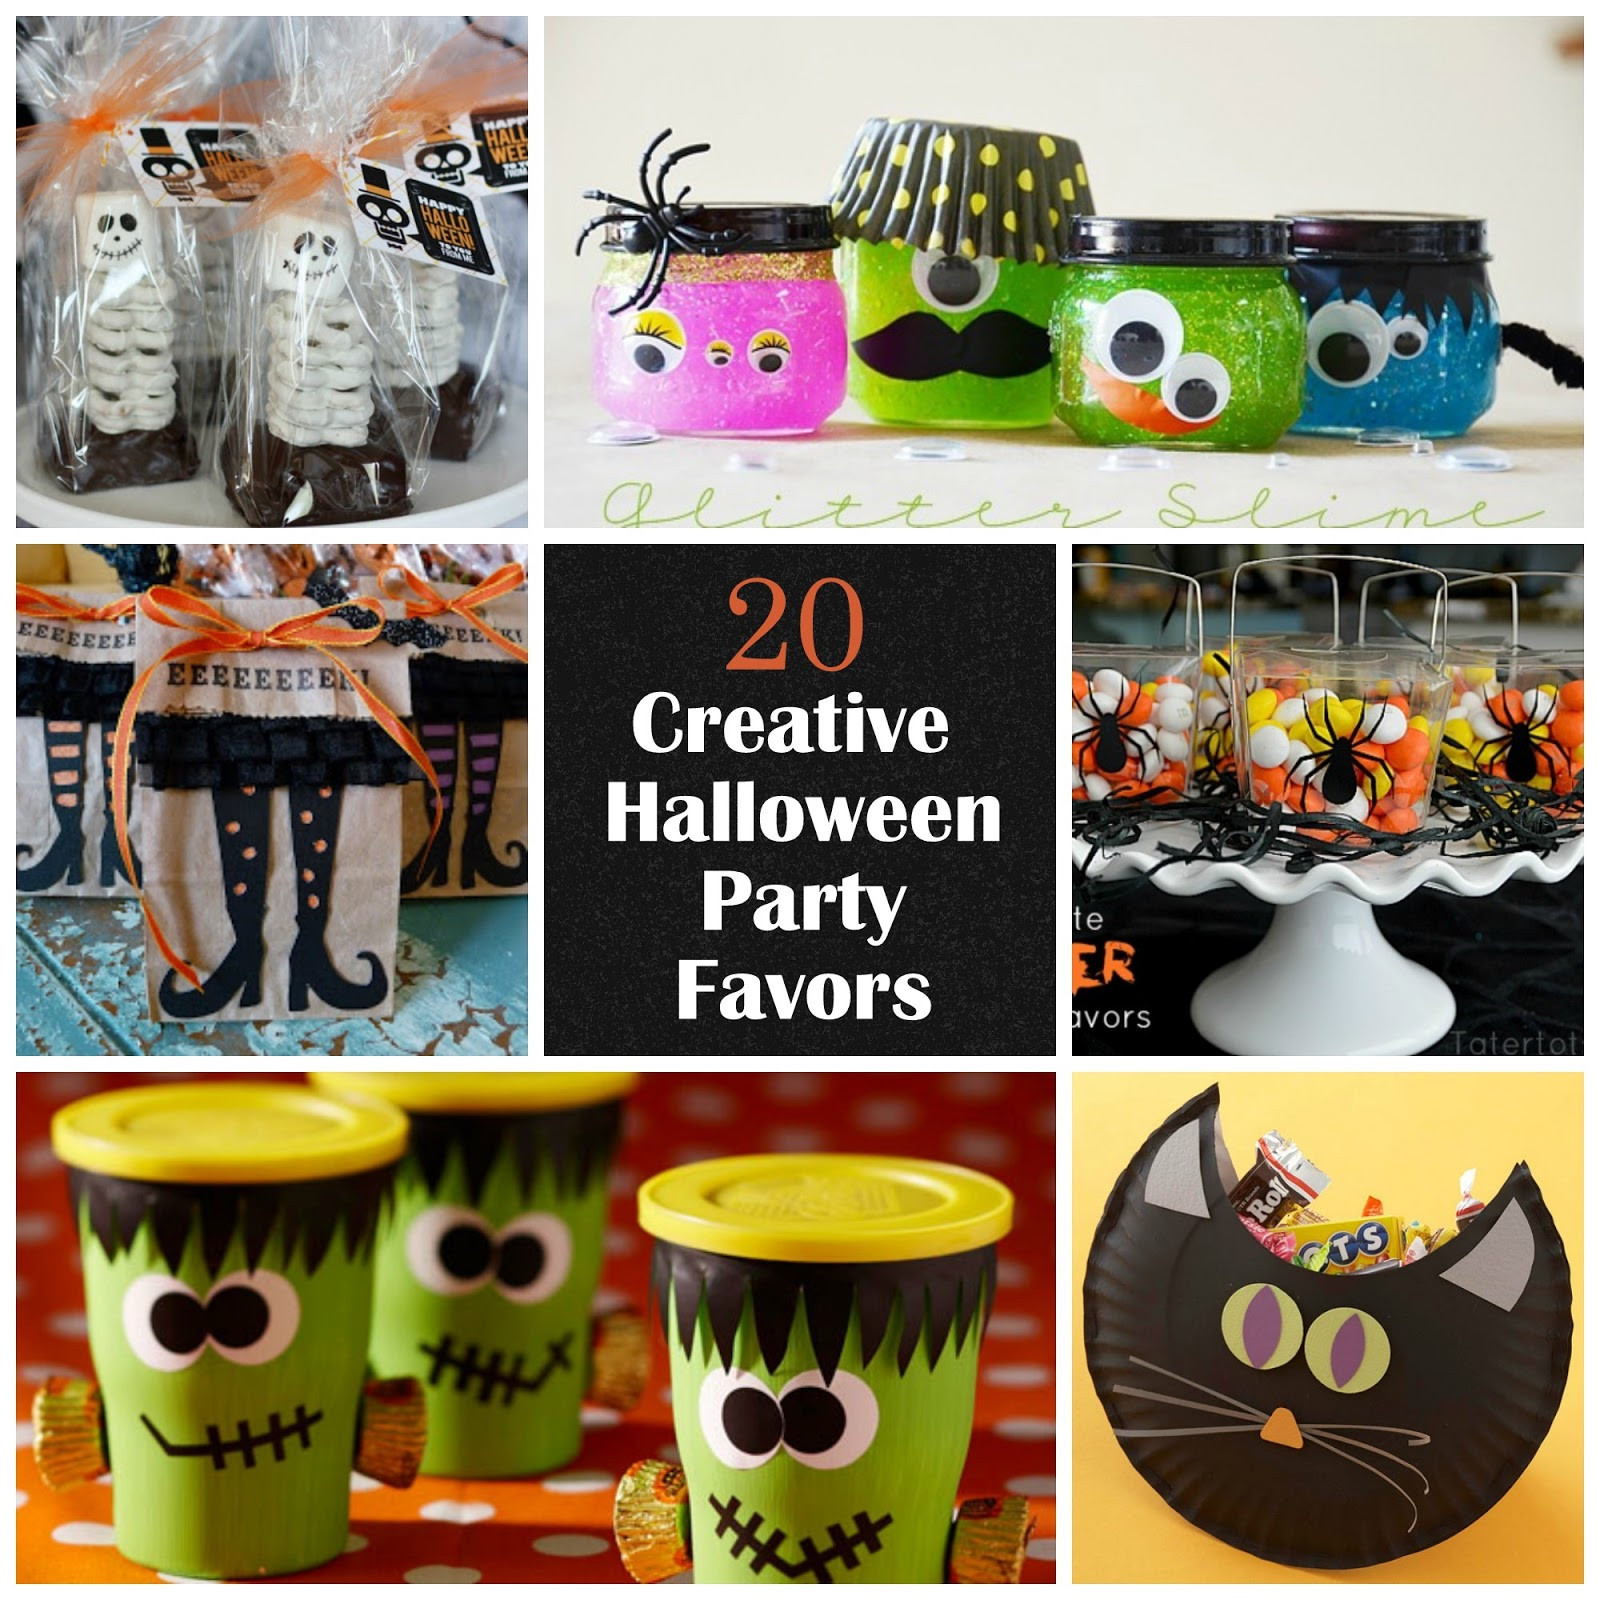 Creative Halloween Party Ideas
 20 Creative Halloween Party Favors I Dig Pinterest